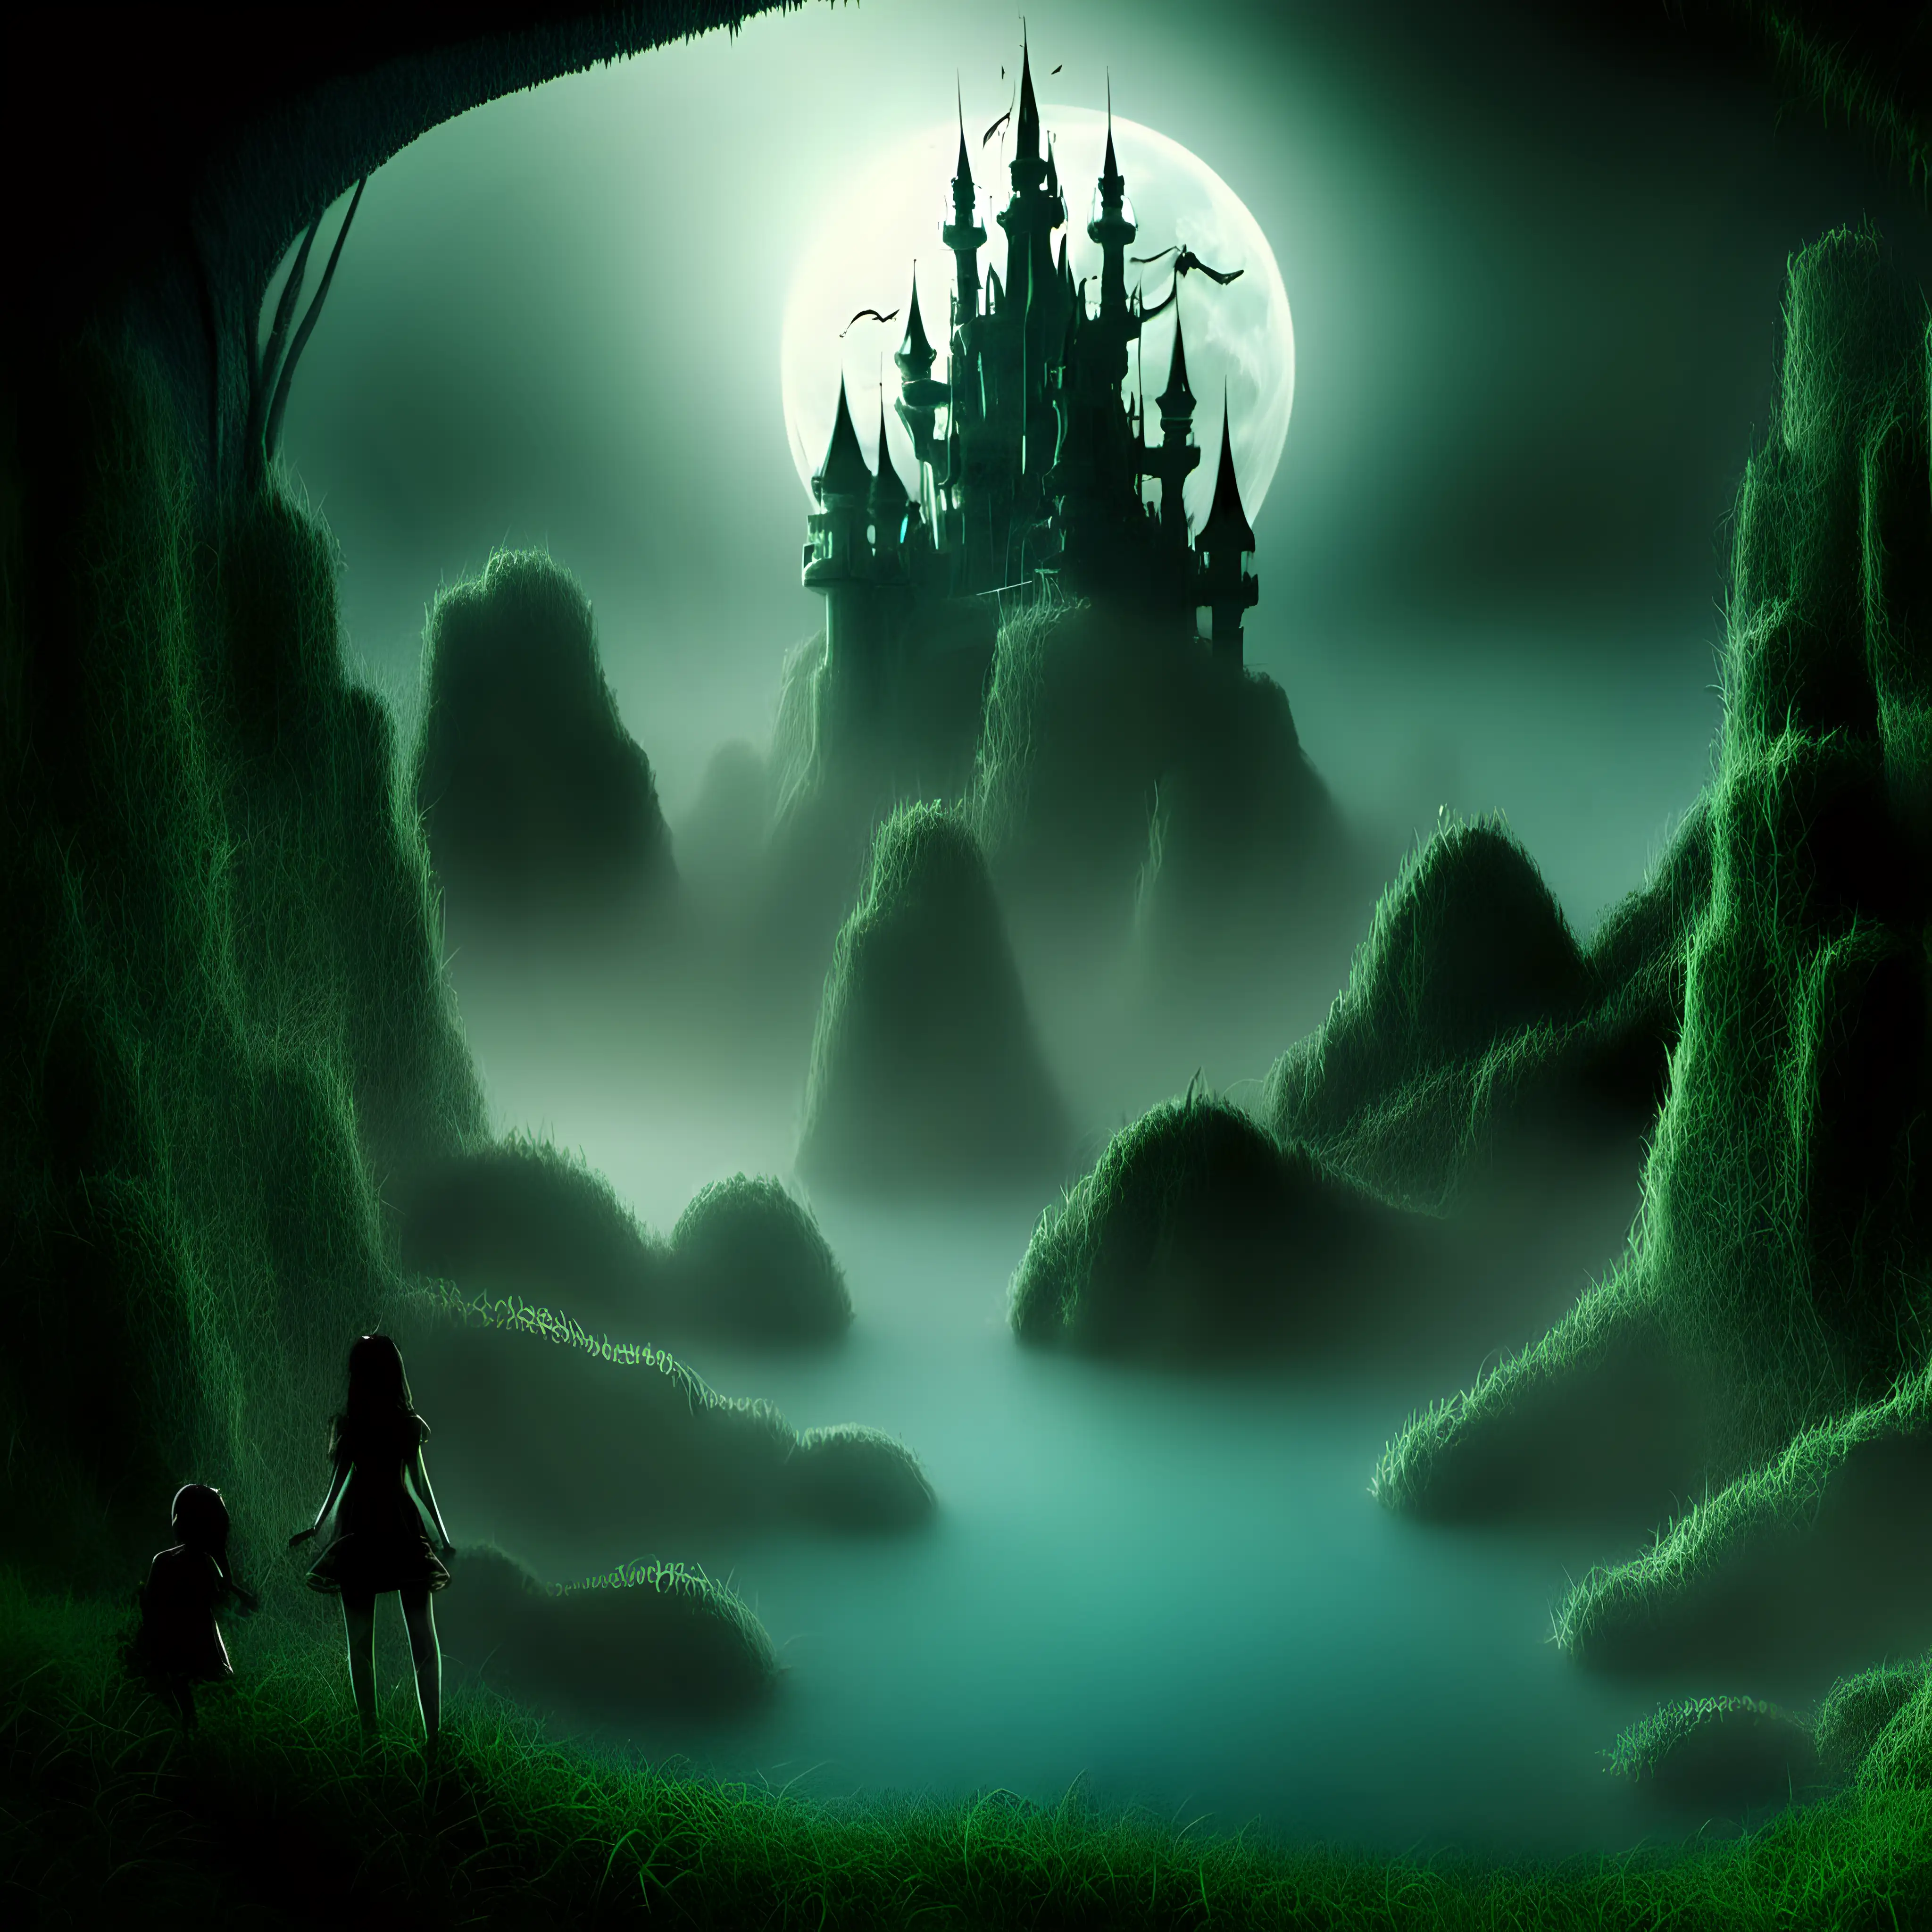 Enchanted Forbidden Fantasy Forest Mystical Creatures and Hidden Secrets